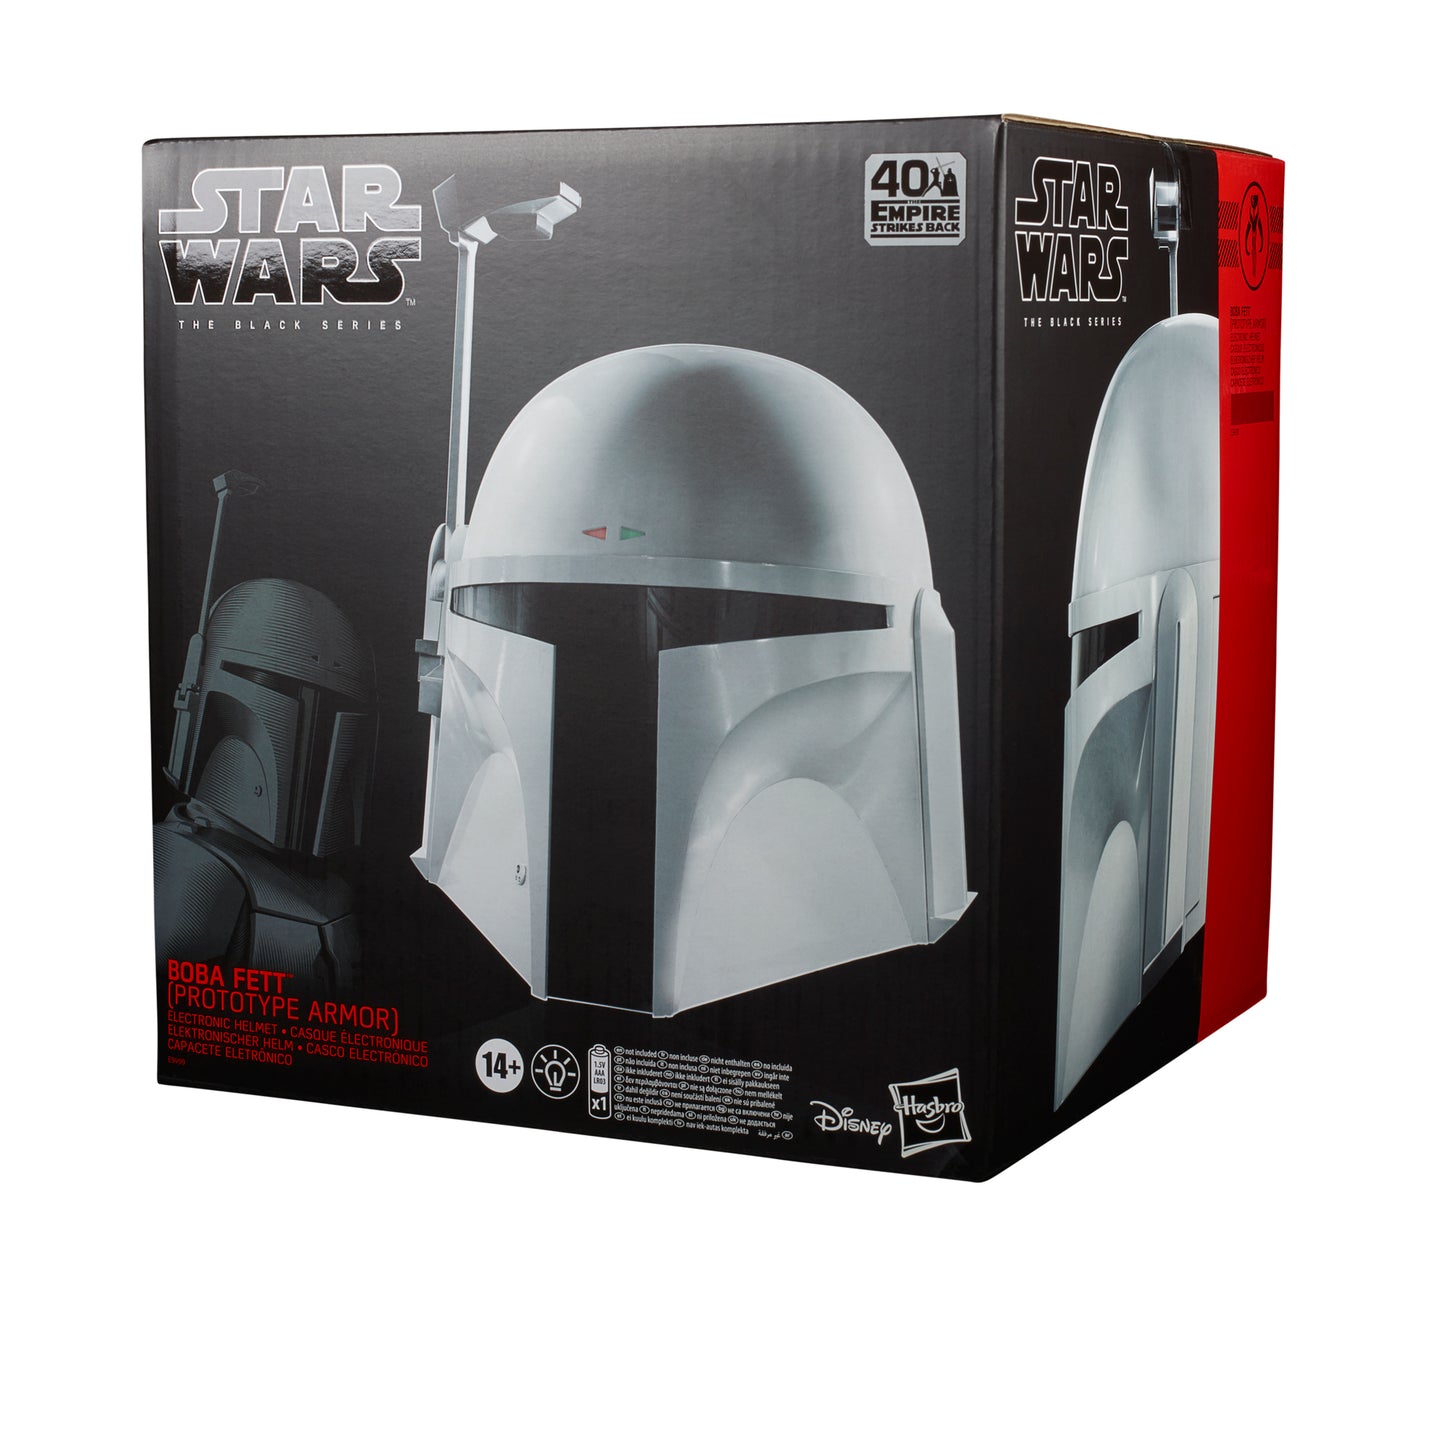 Star Wars The Black Series Boba Fett (Prototype Armor) Electronic Helmet